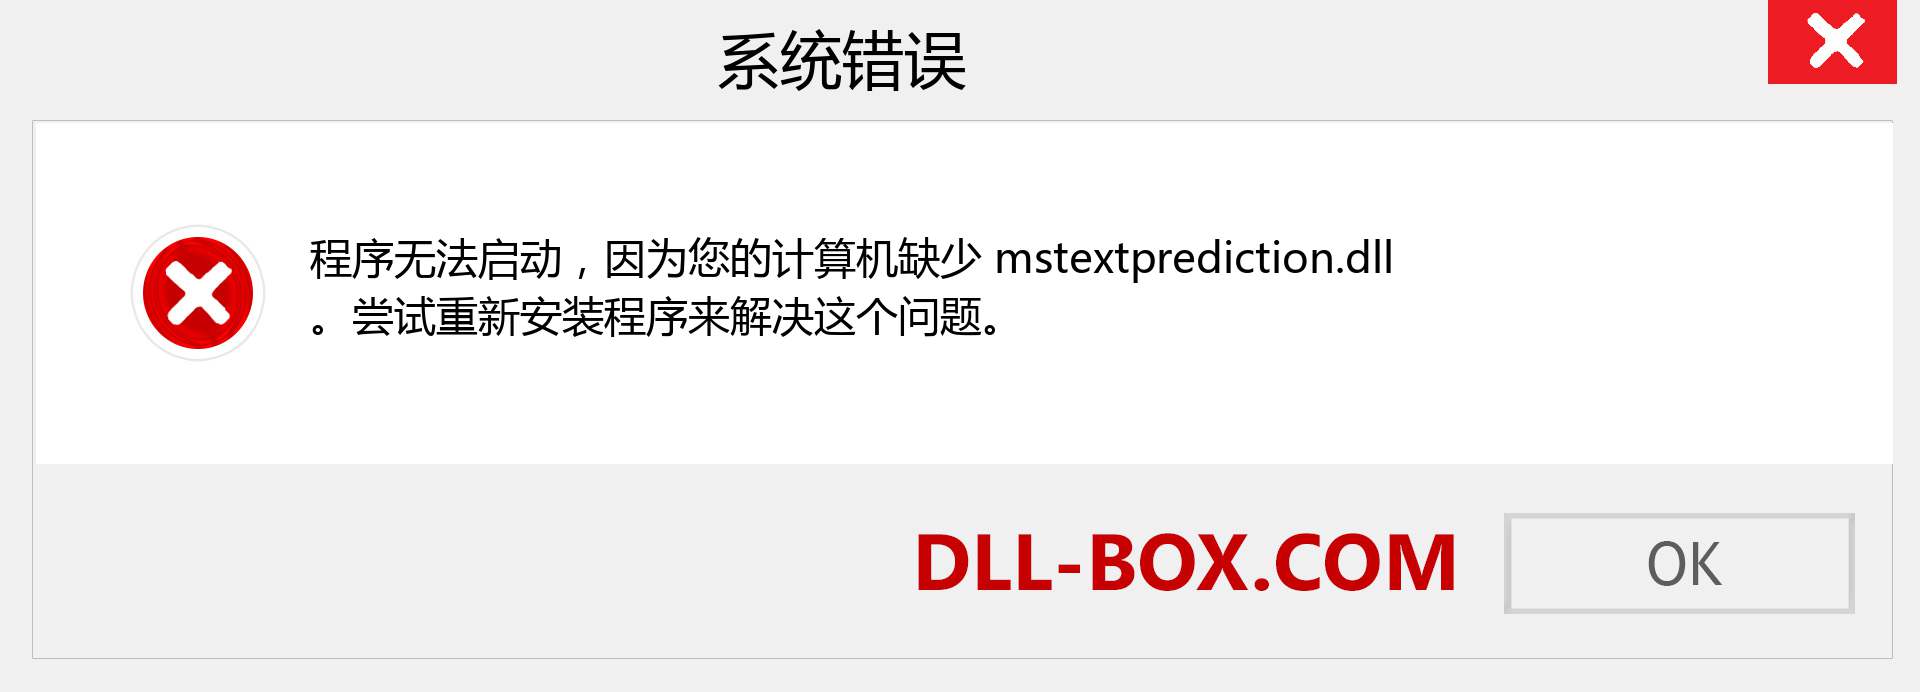 mstextprediction.dll 文件丢失？。 适用于 Windows 7、8、10 的下载 - 修复 Windows、照片、图像上的 mstextprediction dll 丢失错误